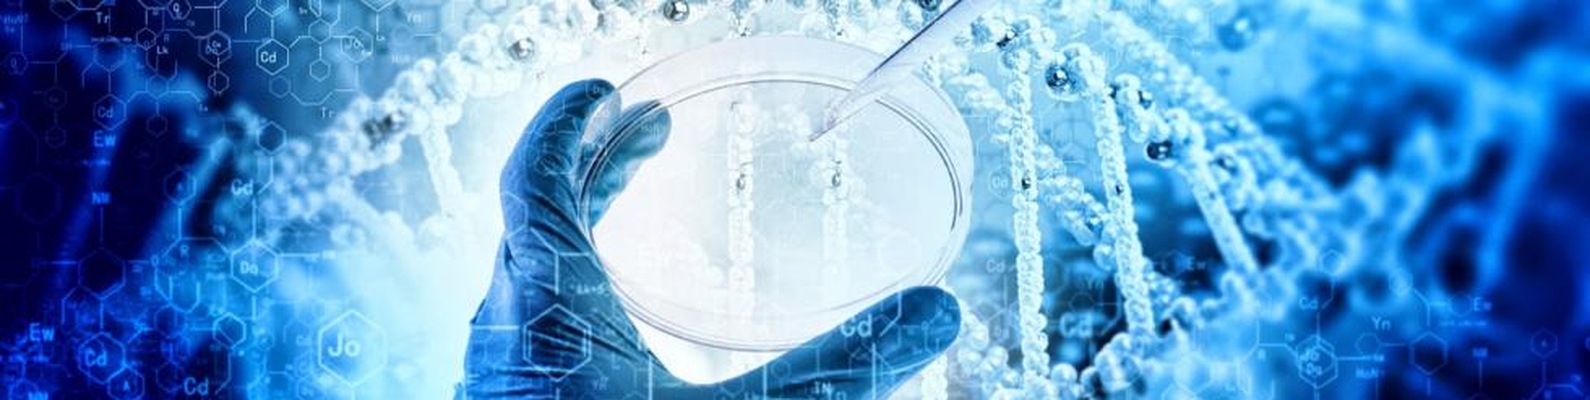 Biotherapeutics Virus Removal Filters Market